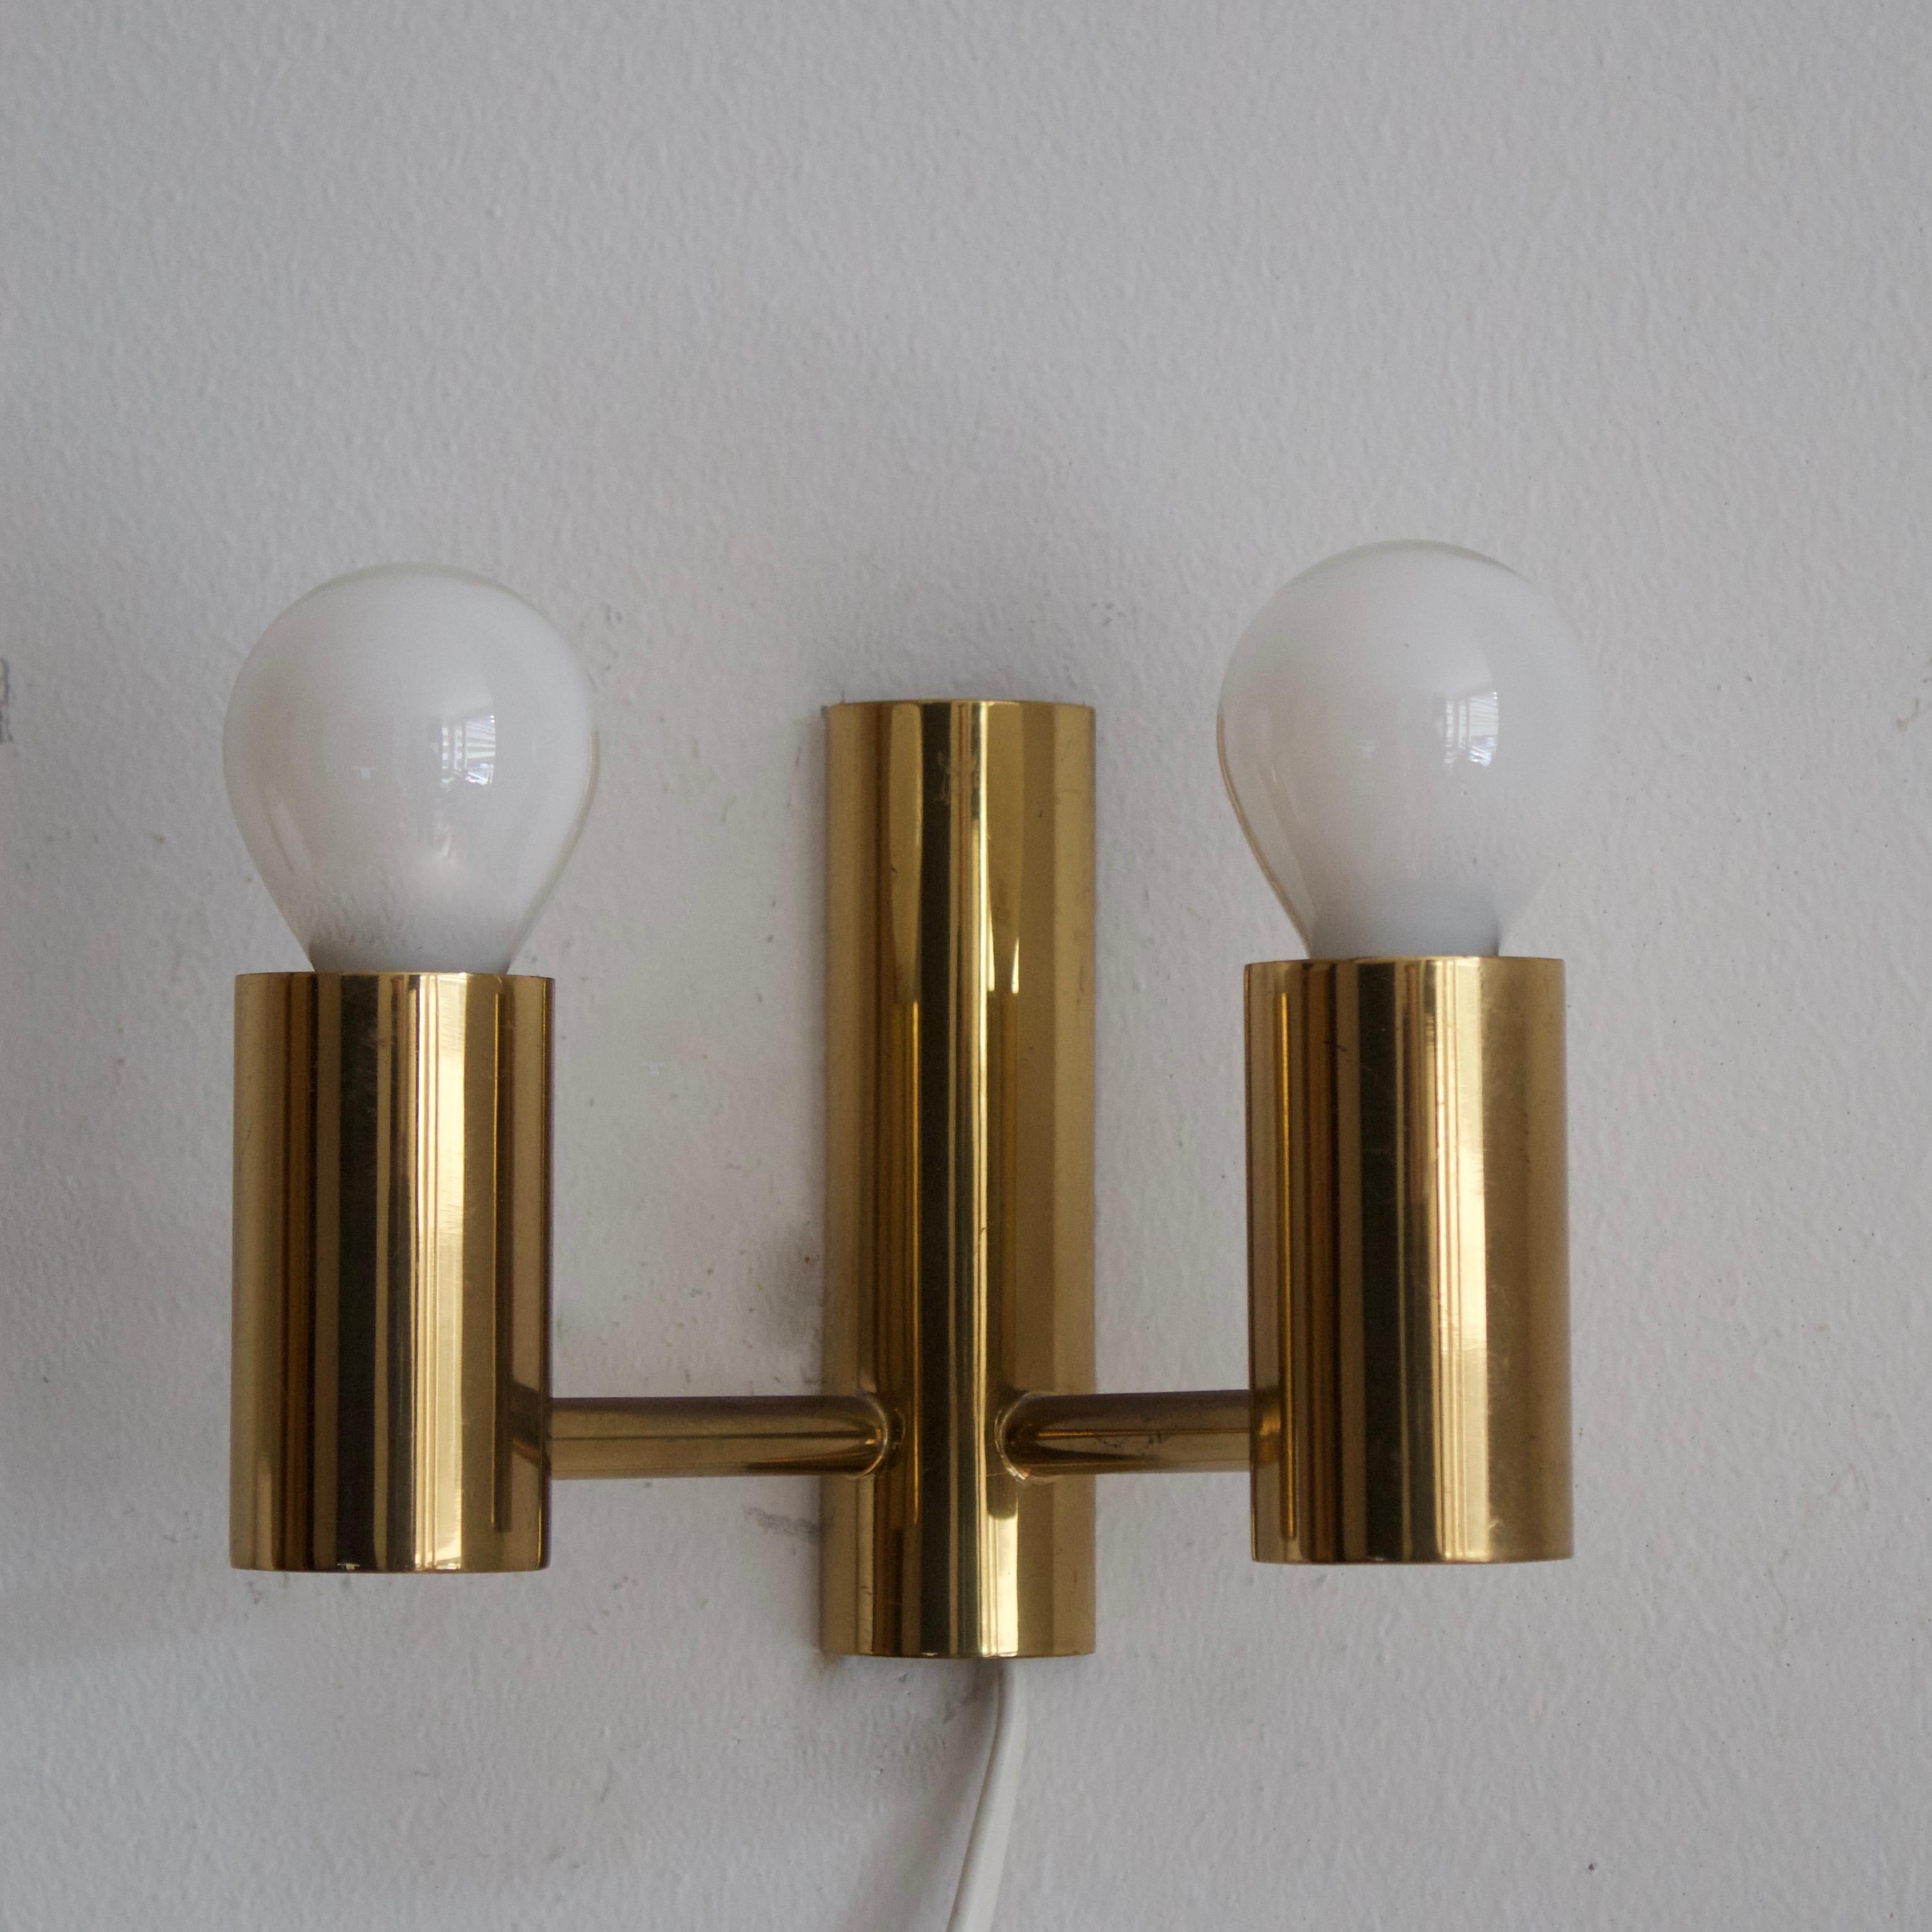 Danish Sven Mejlstrøm, Two-Armed Wall Light, Brass, Fabric, Denmark, 1960s For Sale